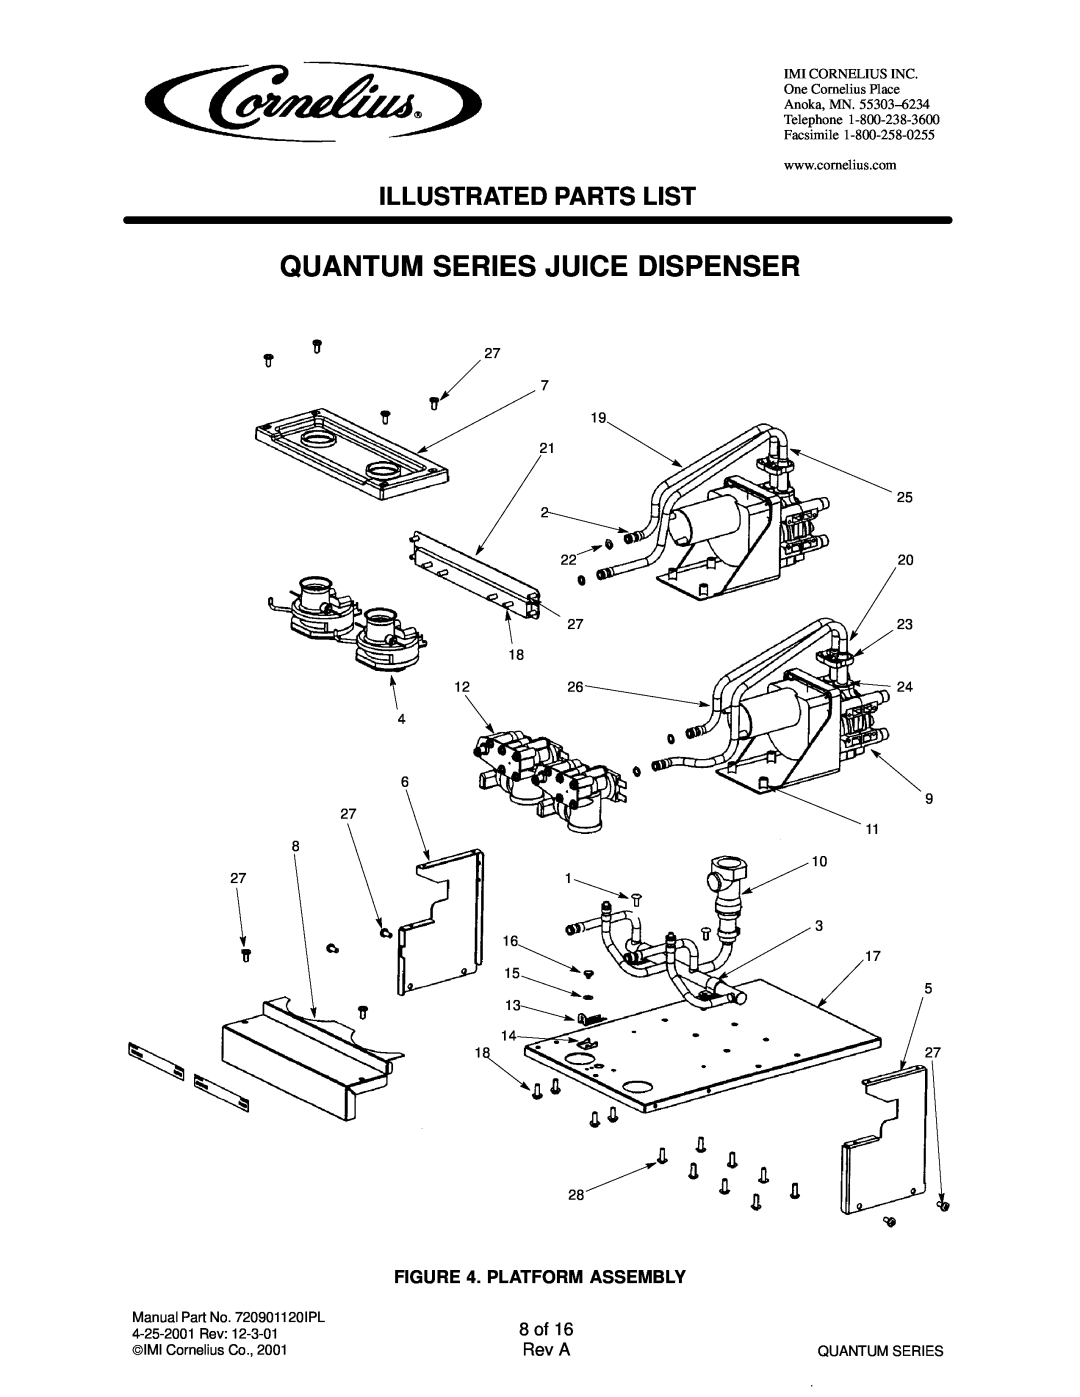 Panasonic 45200001, 45200103, 45200003 Quantum Series Juice Dispenser, Illustrated Parts List, Platform Assembly, of Rev A 